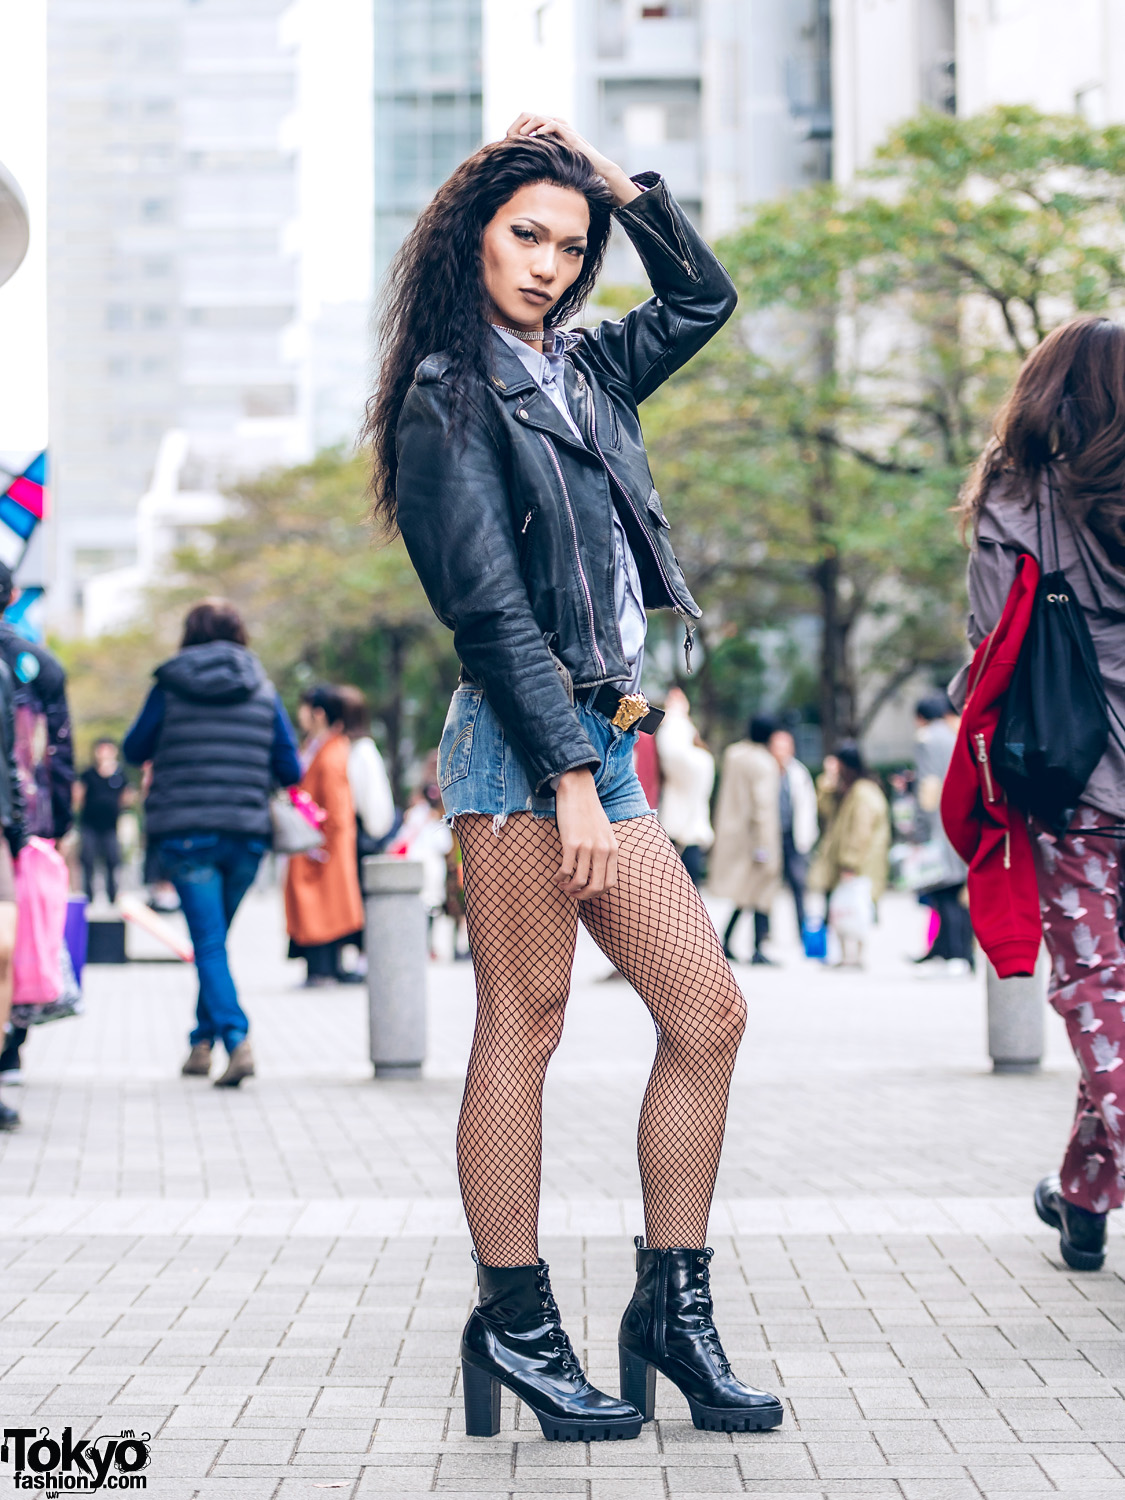 Beauty Student w/ Black Leather Jacket, Jean Shorts, Fishnet